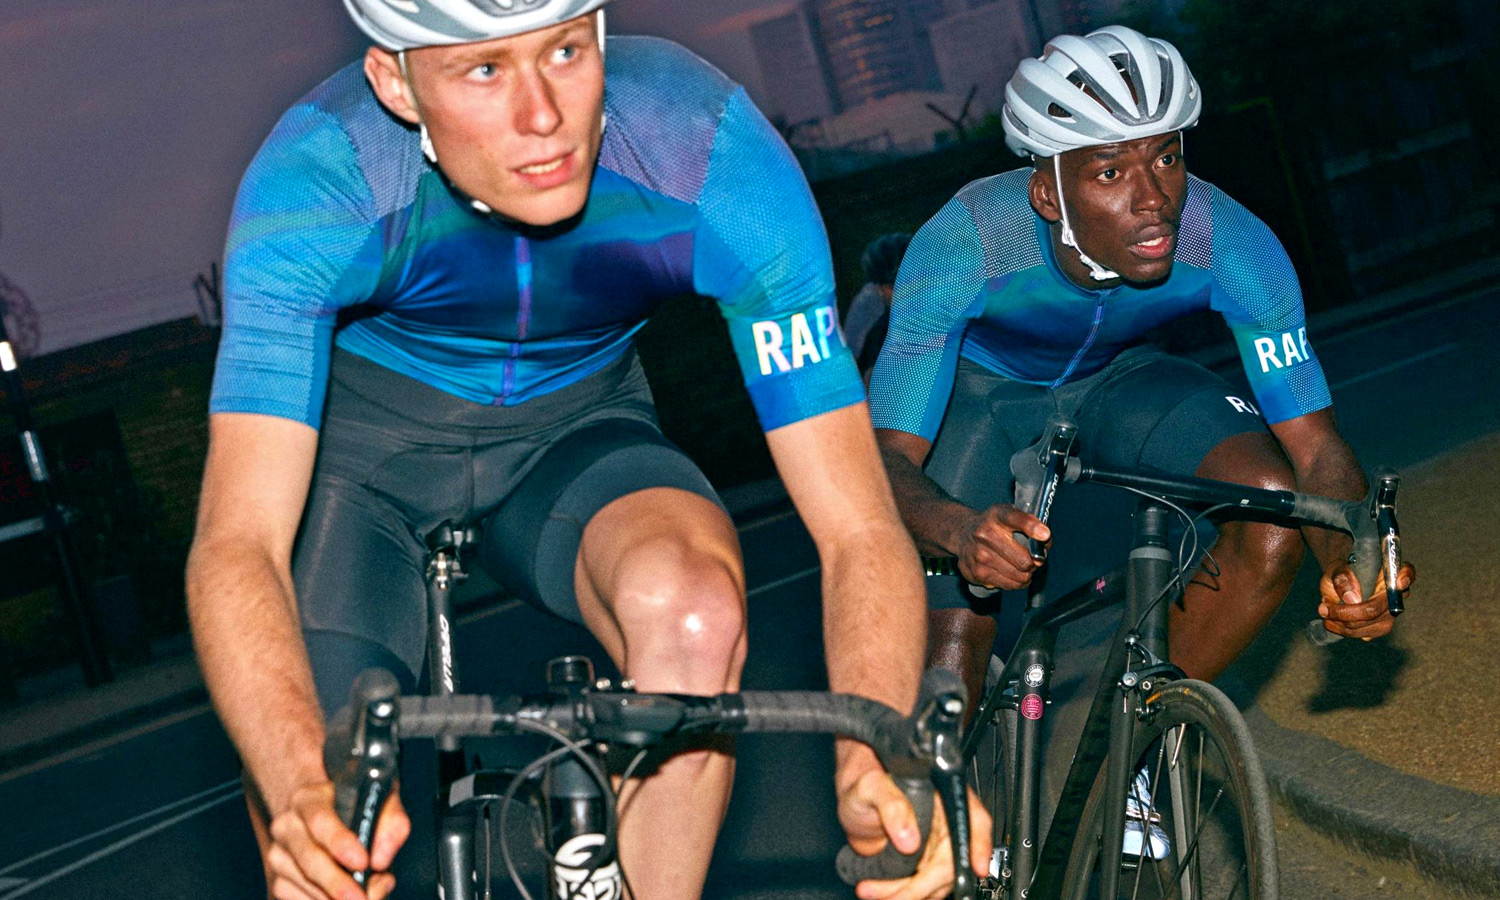 Rapha Crit racers don oil slick inspired, reflective Technicolor dreamsuit & jerseys